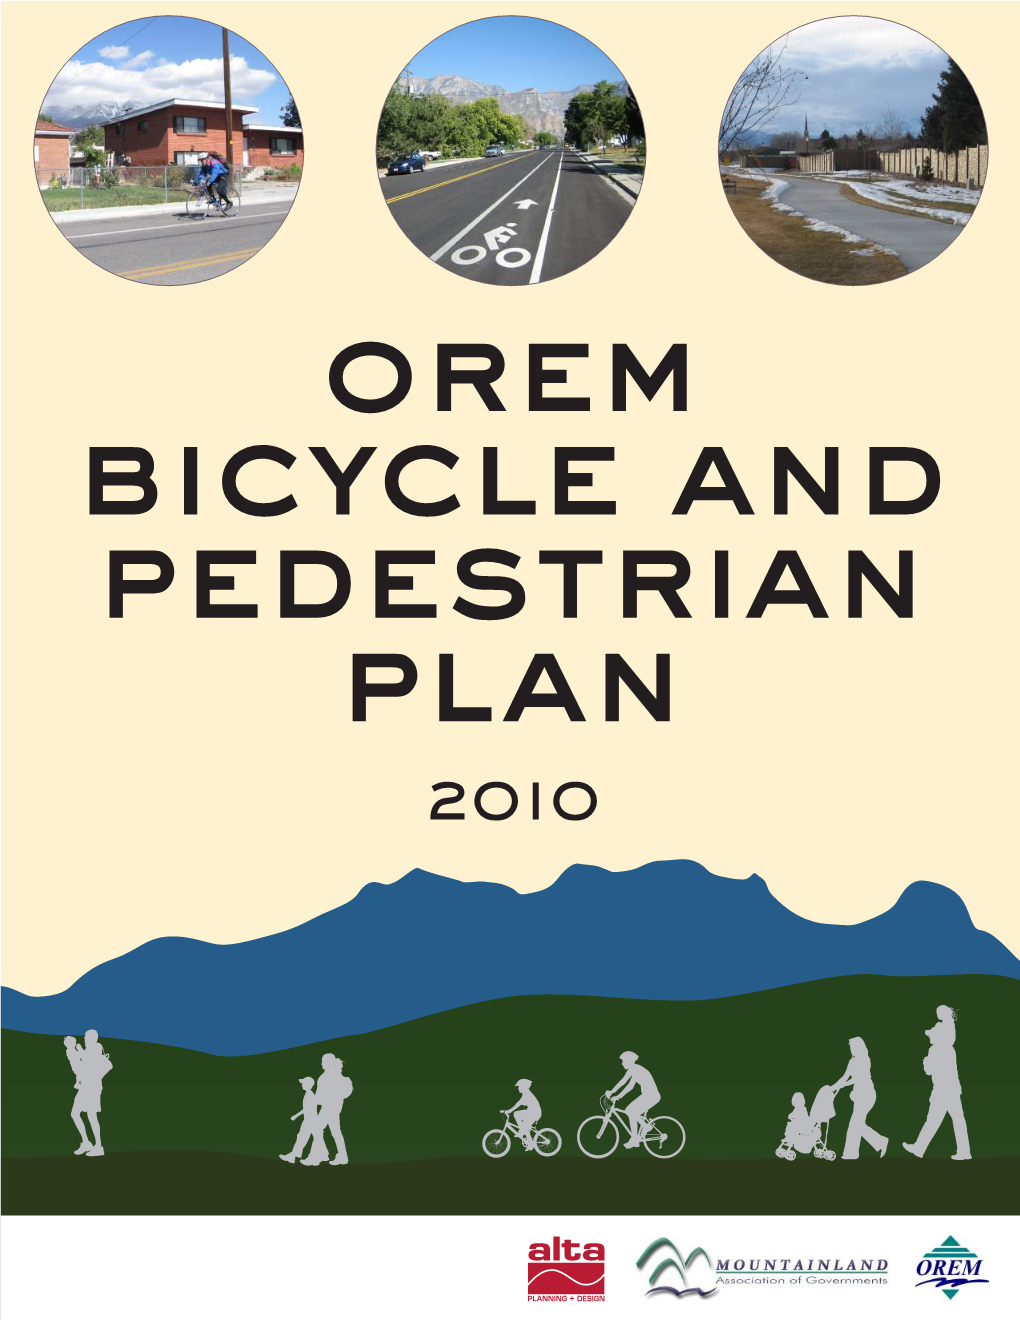 Orem Bicycle and Pedestrian Plan 2010